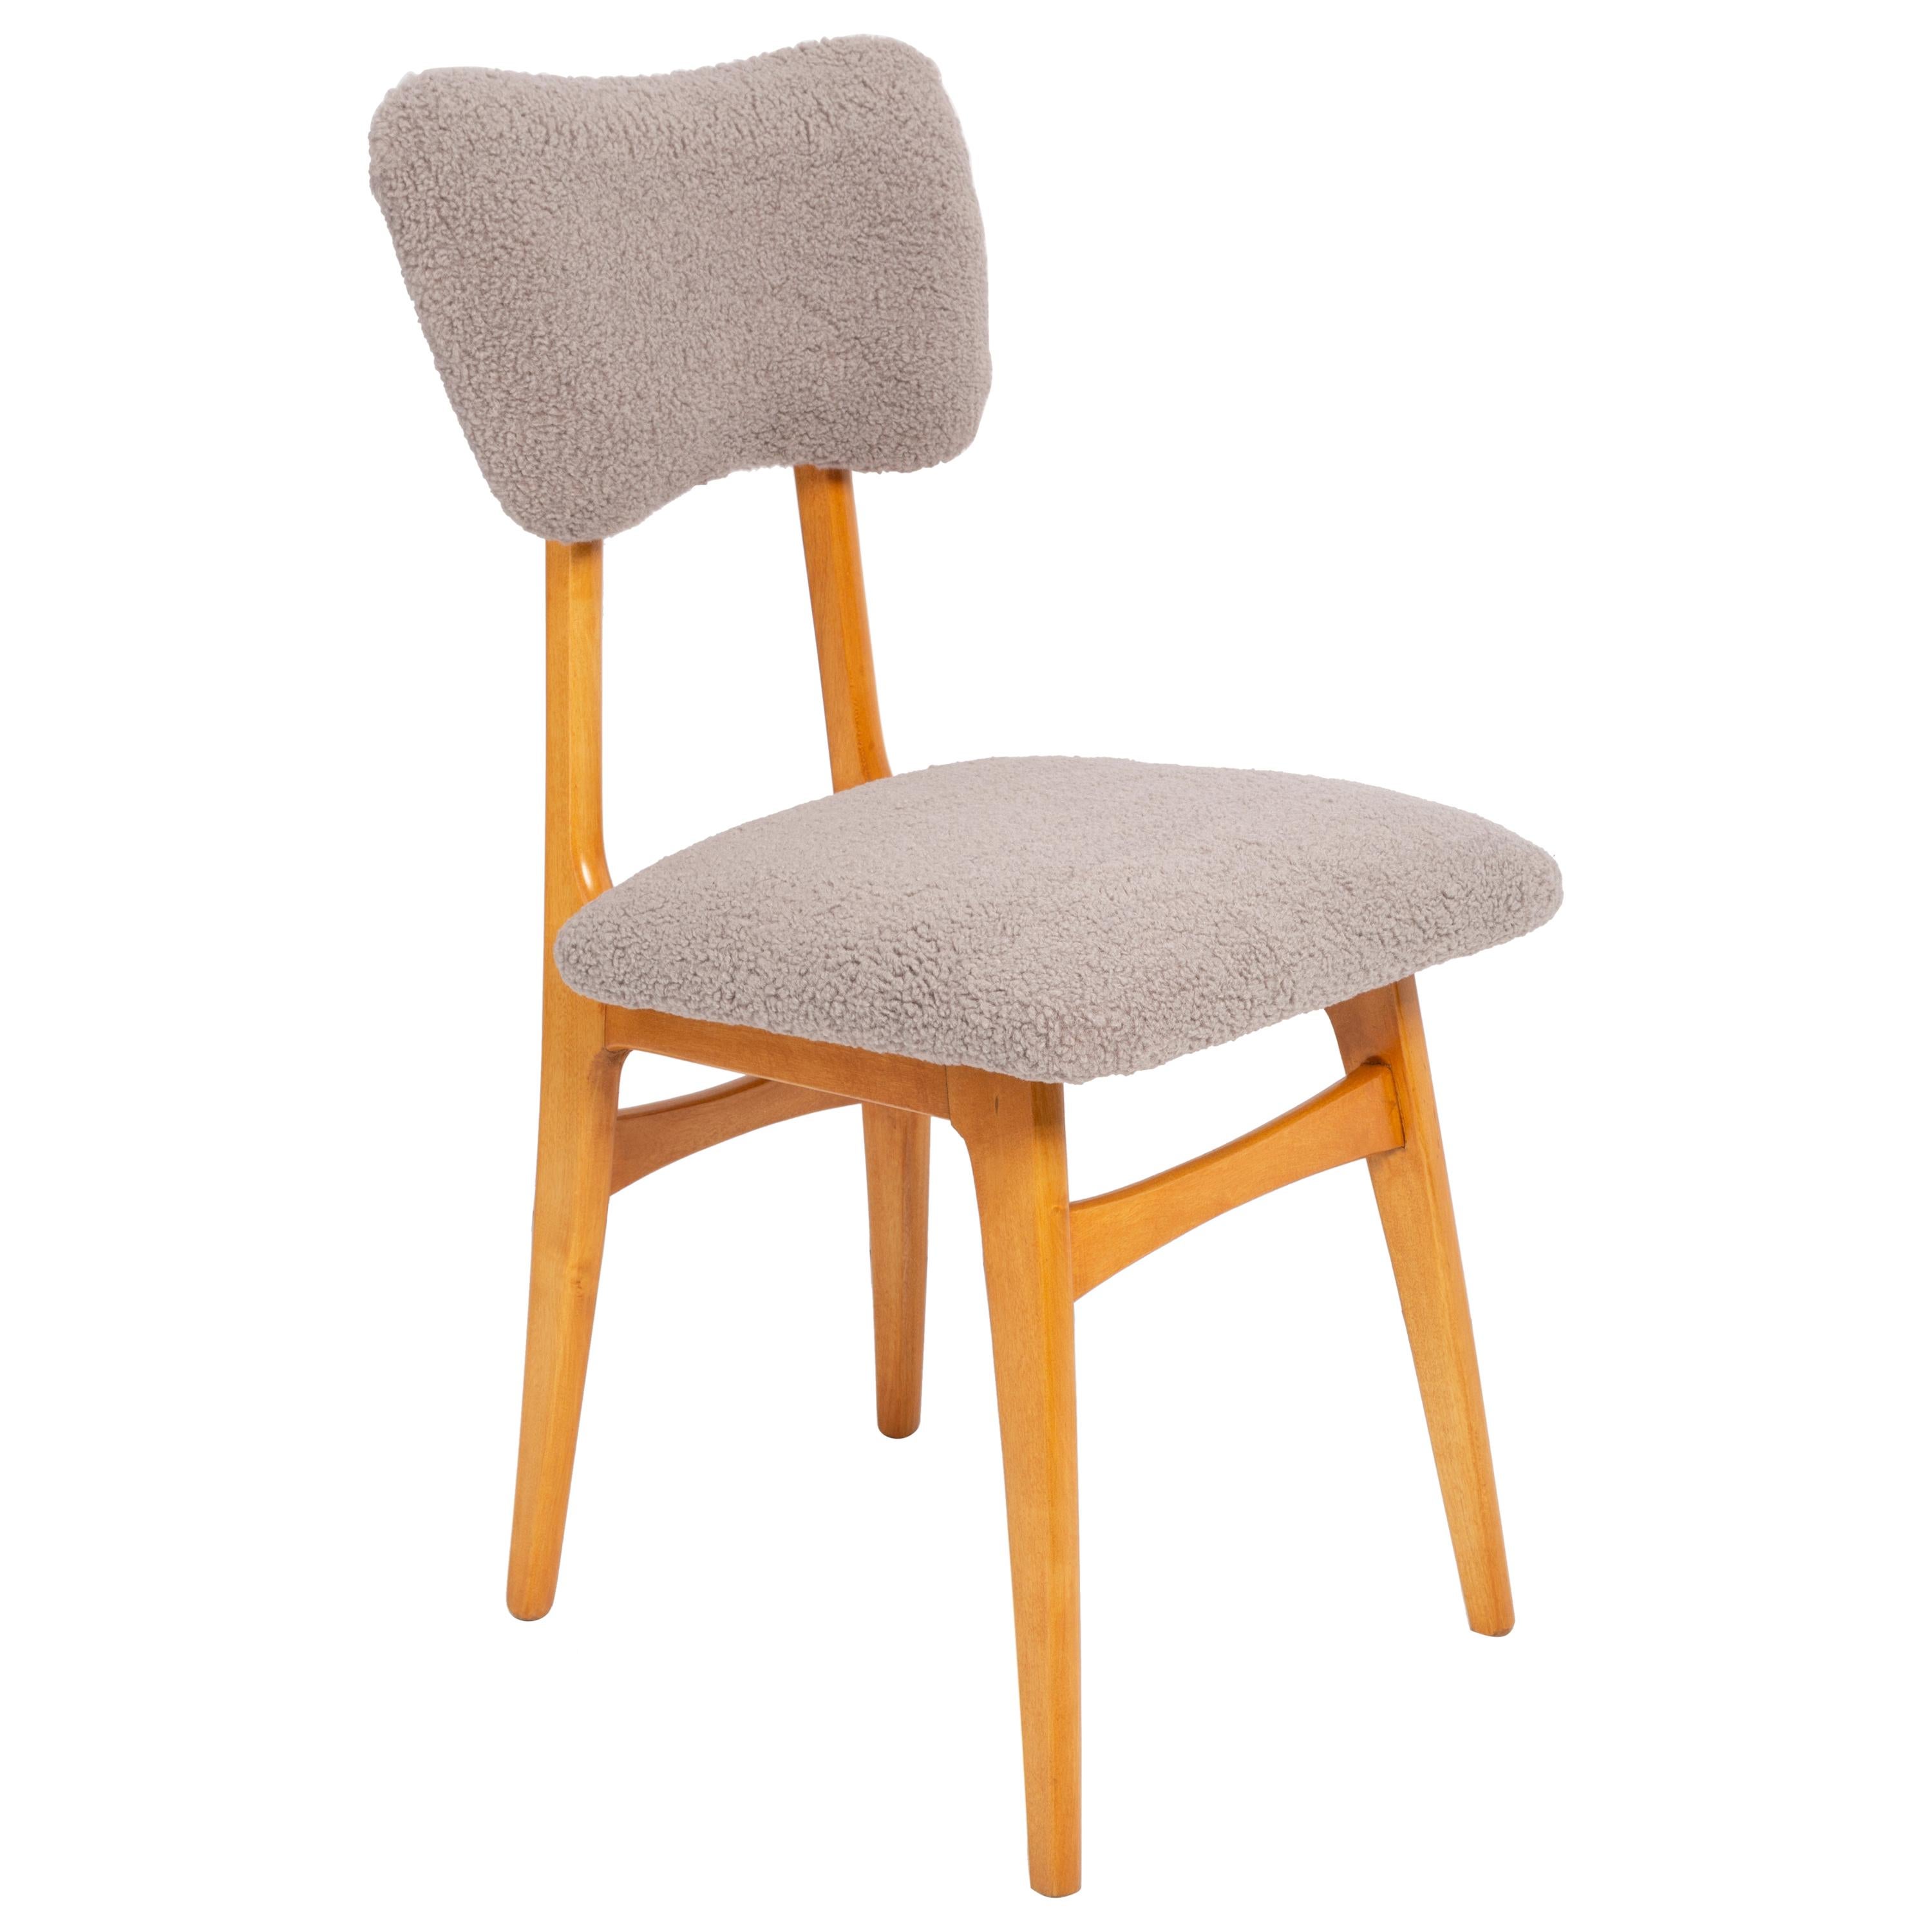 Grauer Boucle-Stuhl des 20. Jahrhunderts, 1960er Jahre